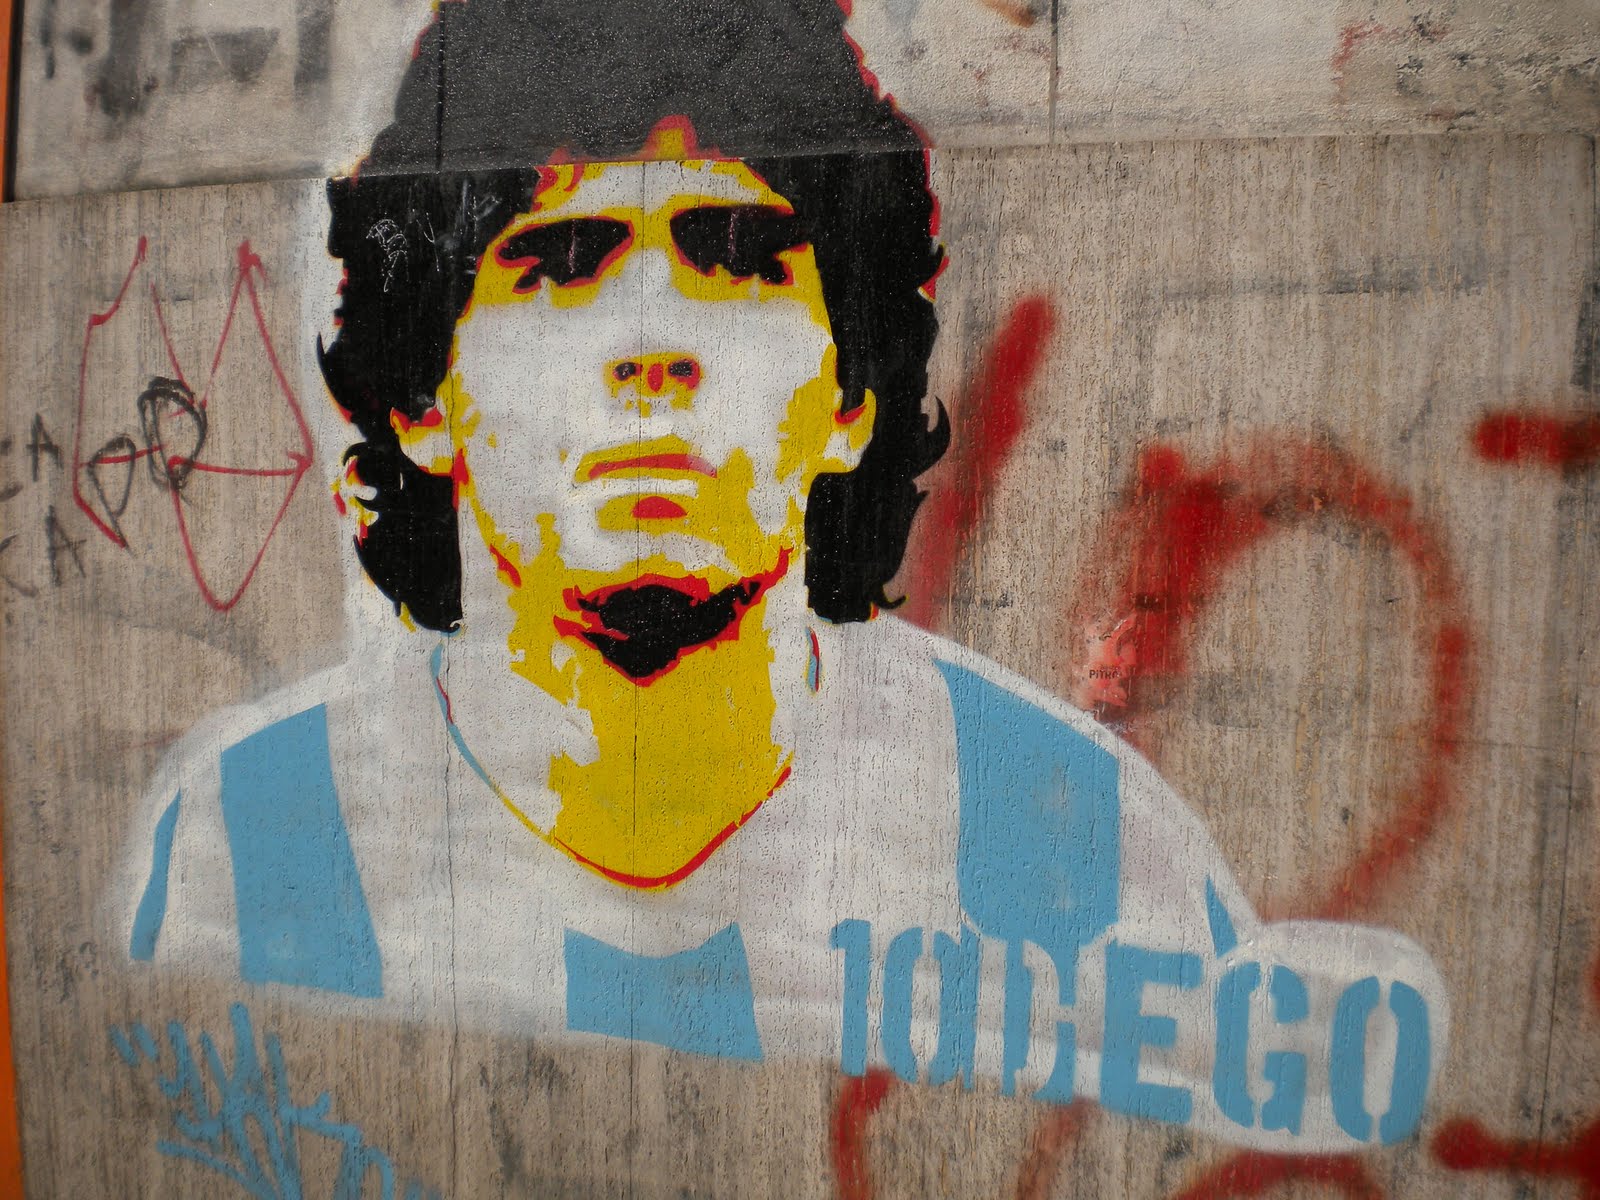 http://4.bp.blogspot.com/-ohg-yHLiWug/Tbc2LsUeG0I/AAAAAAAAAiA/JNTMJ9J-B9w/s1600/Diego+Maradona+Graffiti+at+La+Boca%252C+Buenos+Aires+by+Cadaverexquisito.jpg